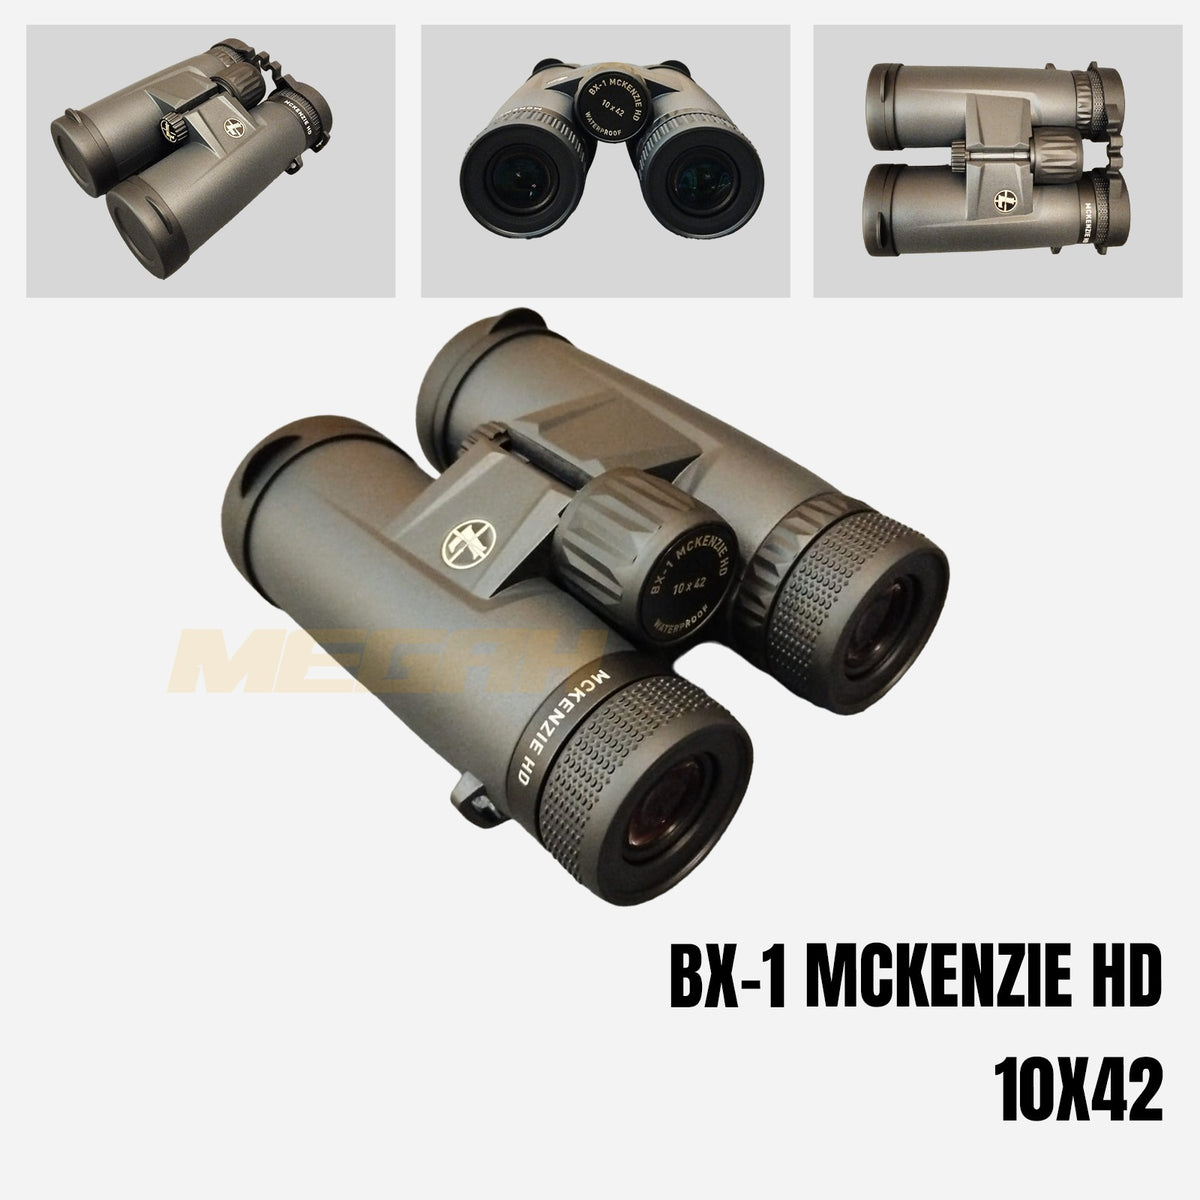 TEROPONG/BINOCULAR LEUPOLD BX-1 MCKENZIE HD 10x42mm